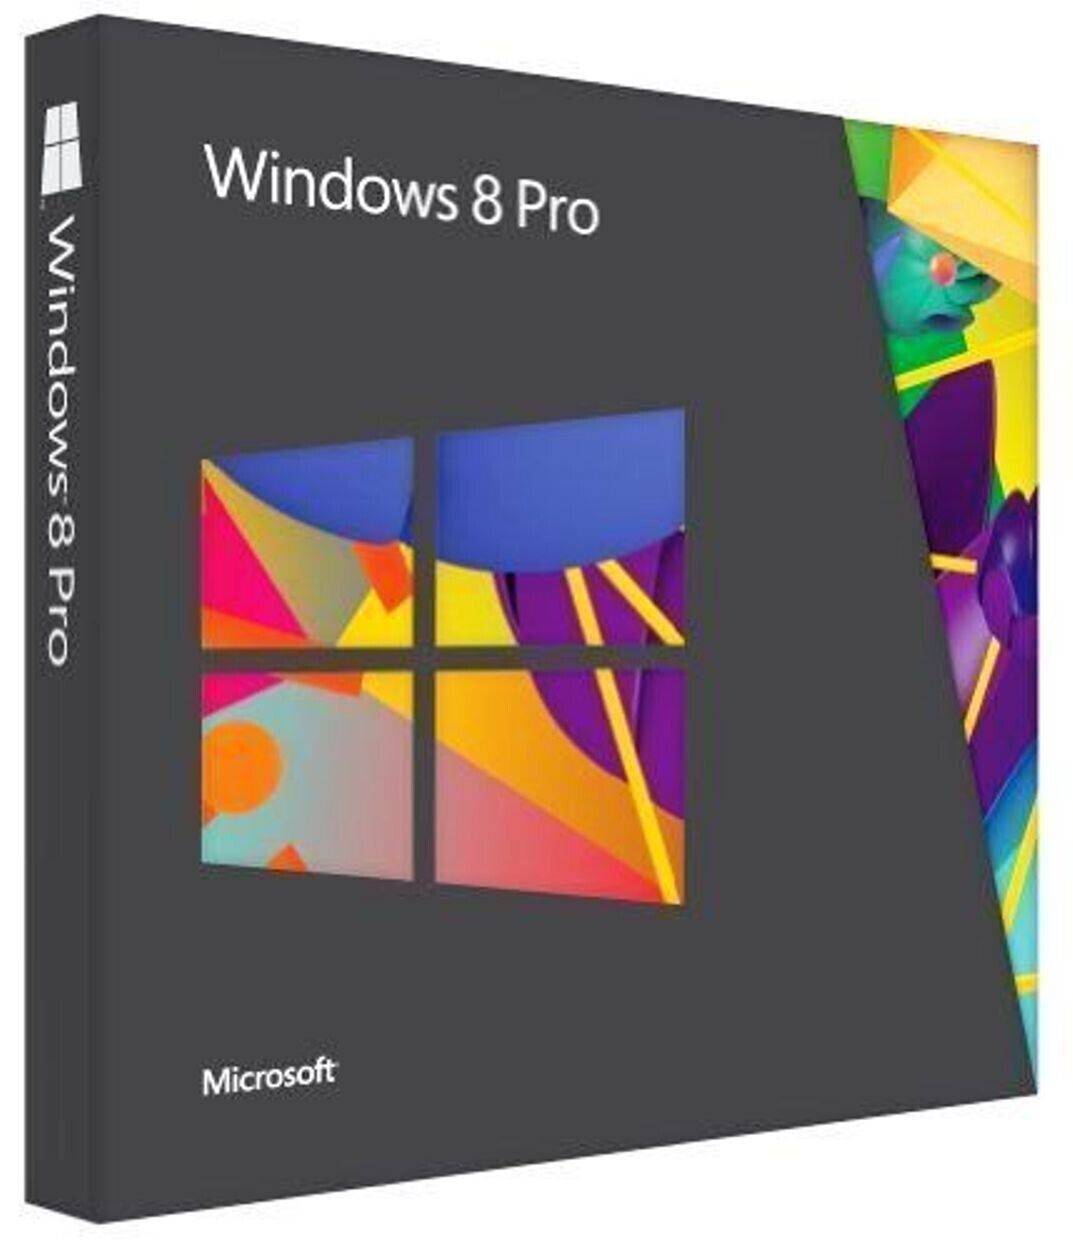 Windows 8 Professional 64 bit Install / restore DVD w/ Key for HP & Others